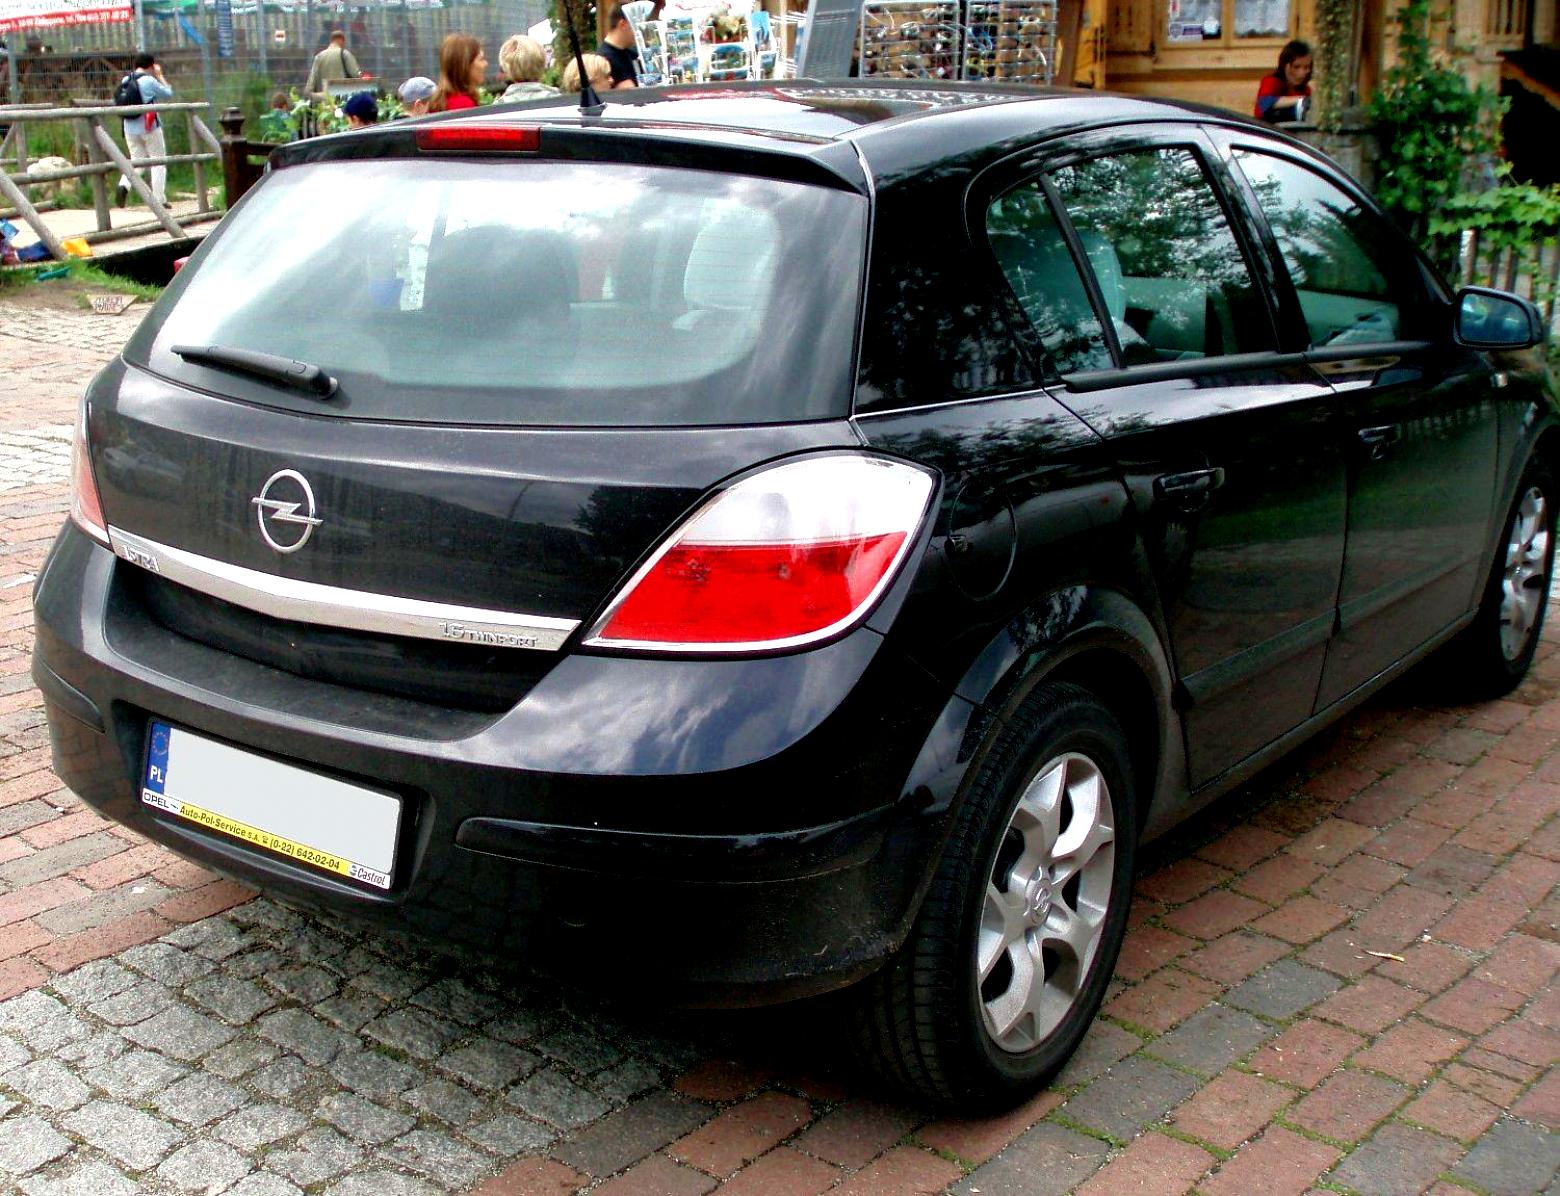 Vauxhall Astra Hatchback 2009 #2